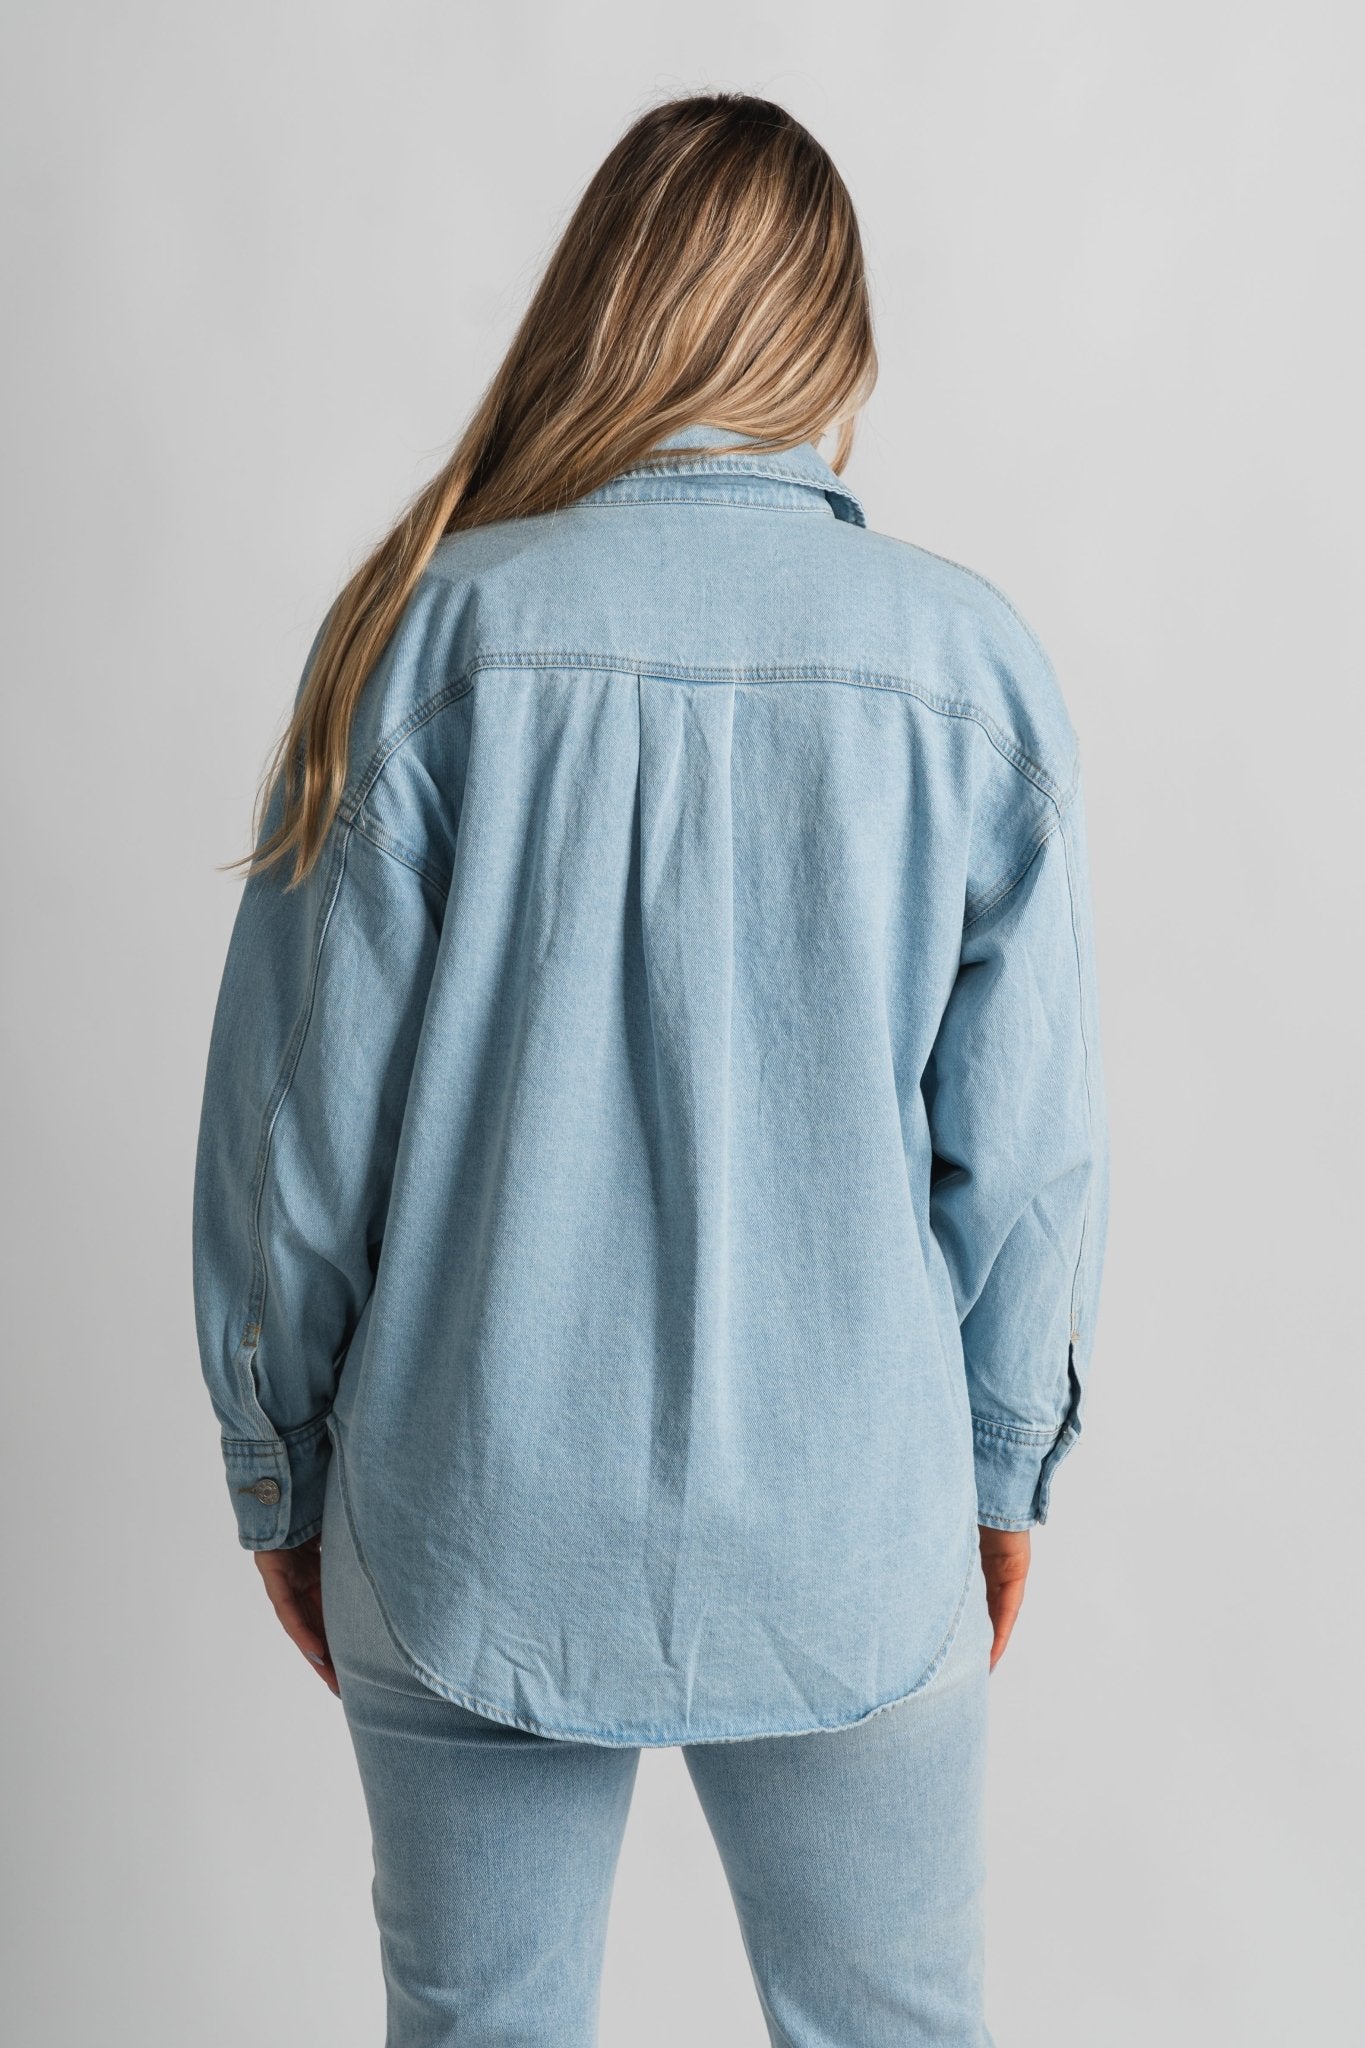 Denim shirt jacket light denim – Unique Blazers | Cute Blazers For Women at Lush Fashion Lounge Boutique in Oklahoma City